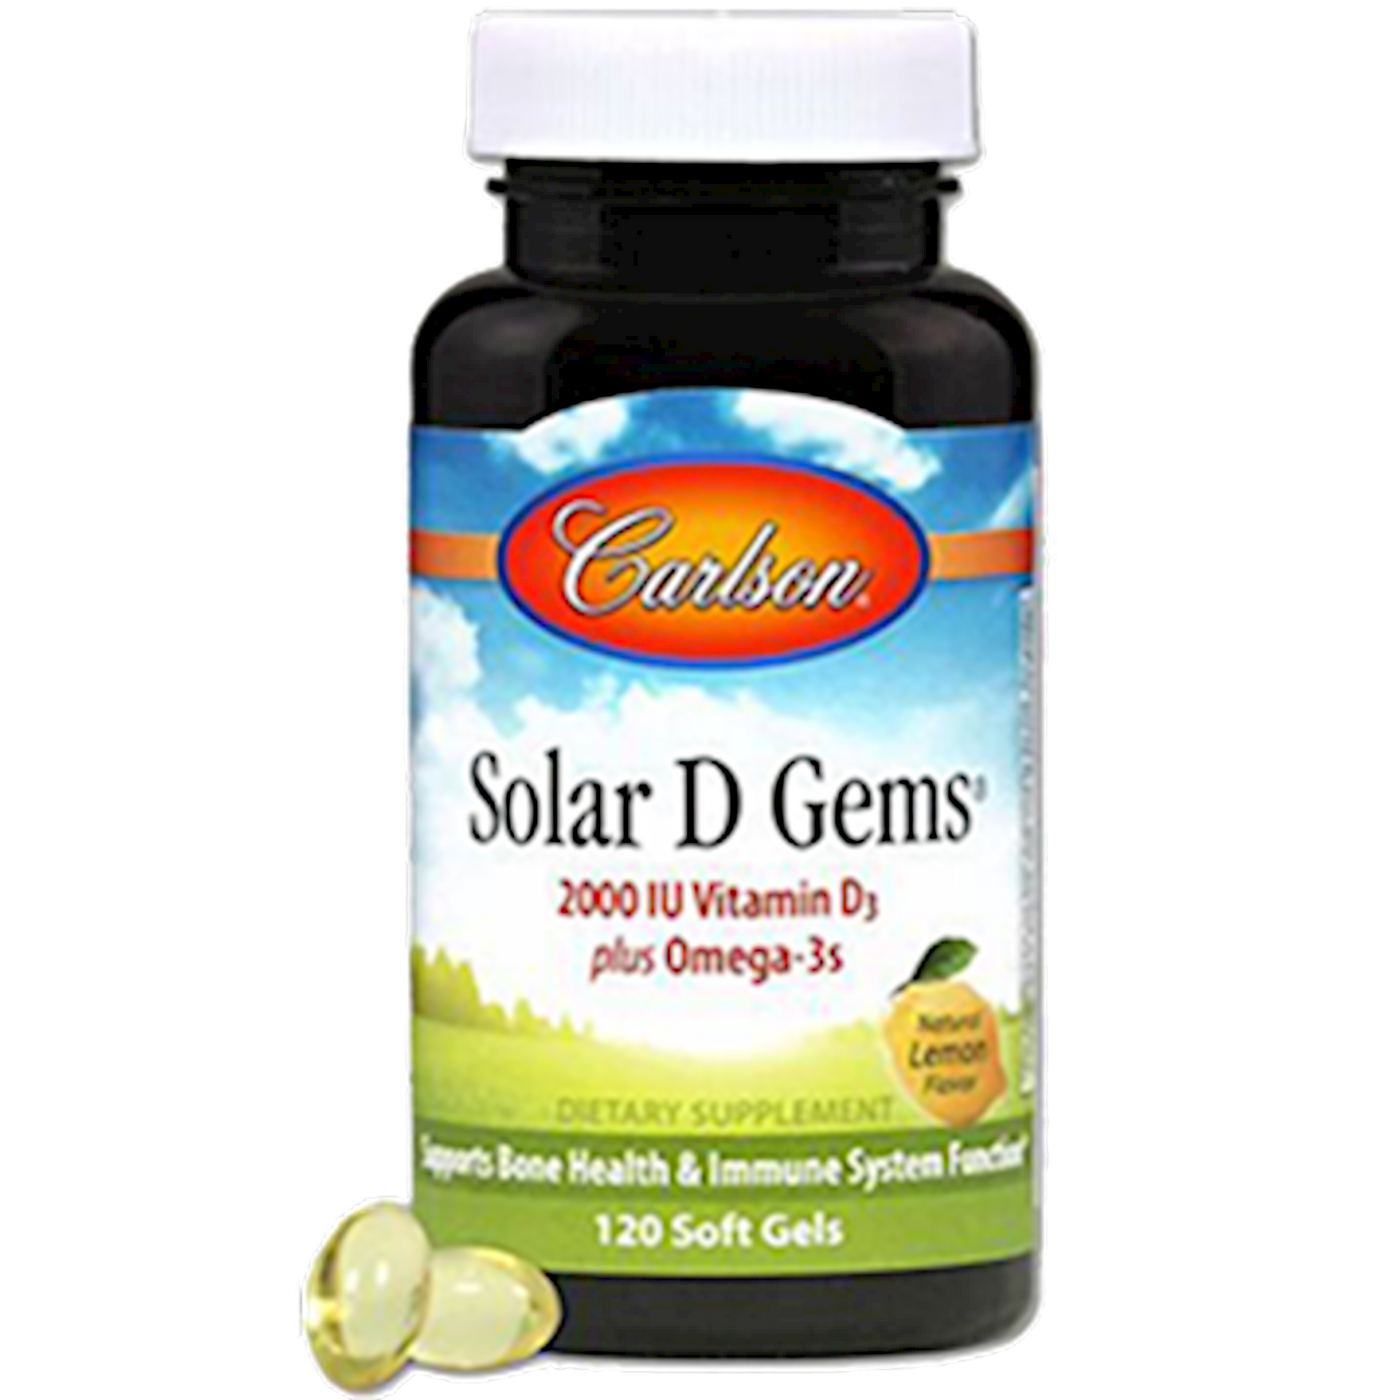 Solar D Gems 2000 IU 120 gels Curated Wellness